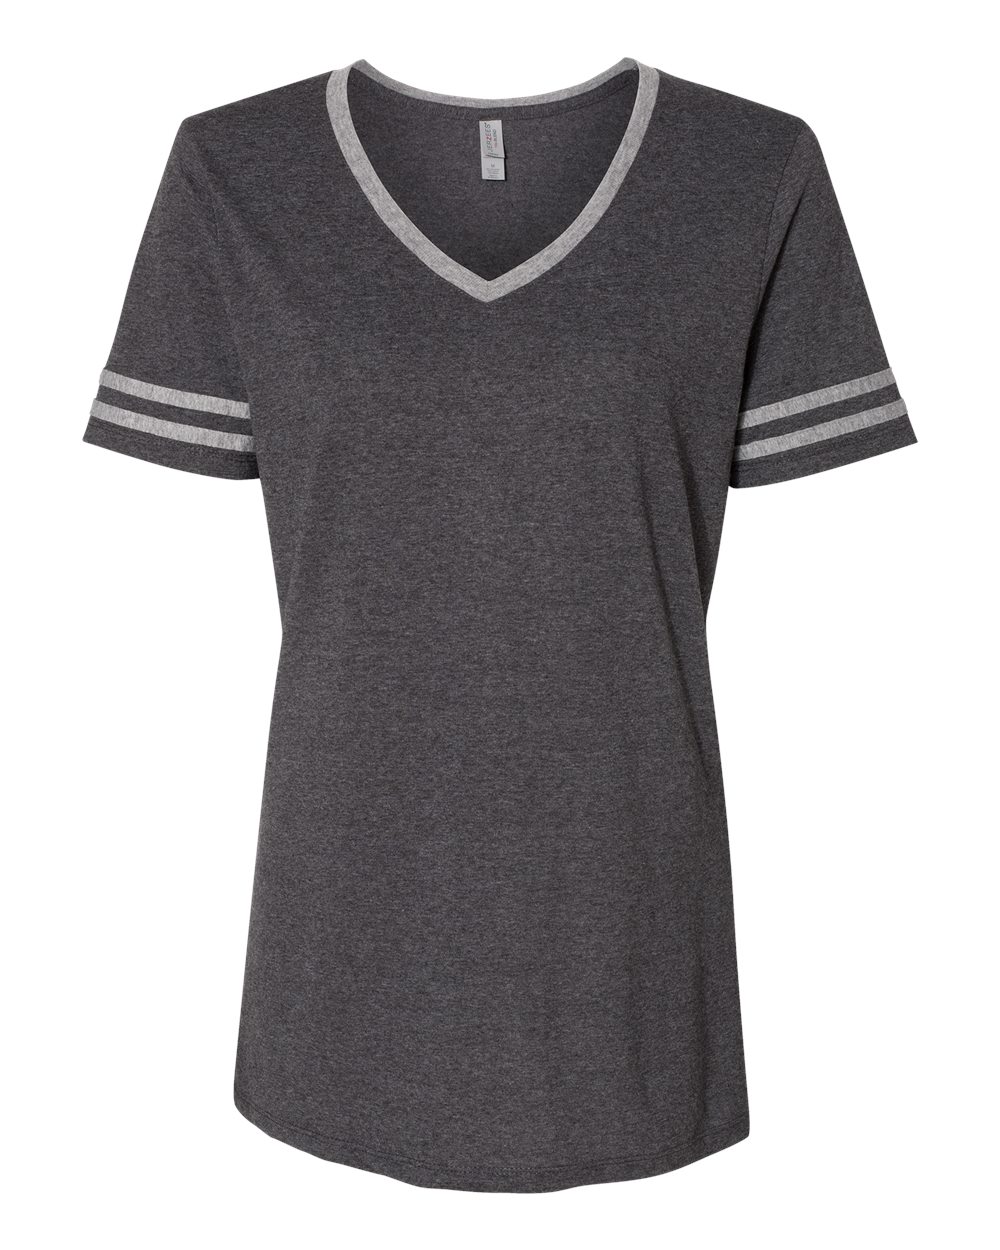 JERZEES Women's Varsity Triblend V-Neck T-Shirt Short Sleeve 602WVR up ...